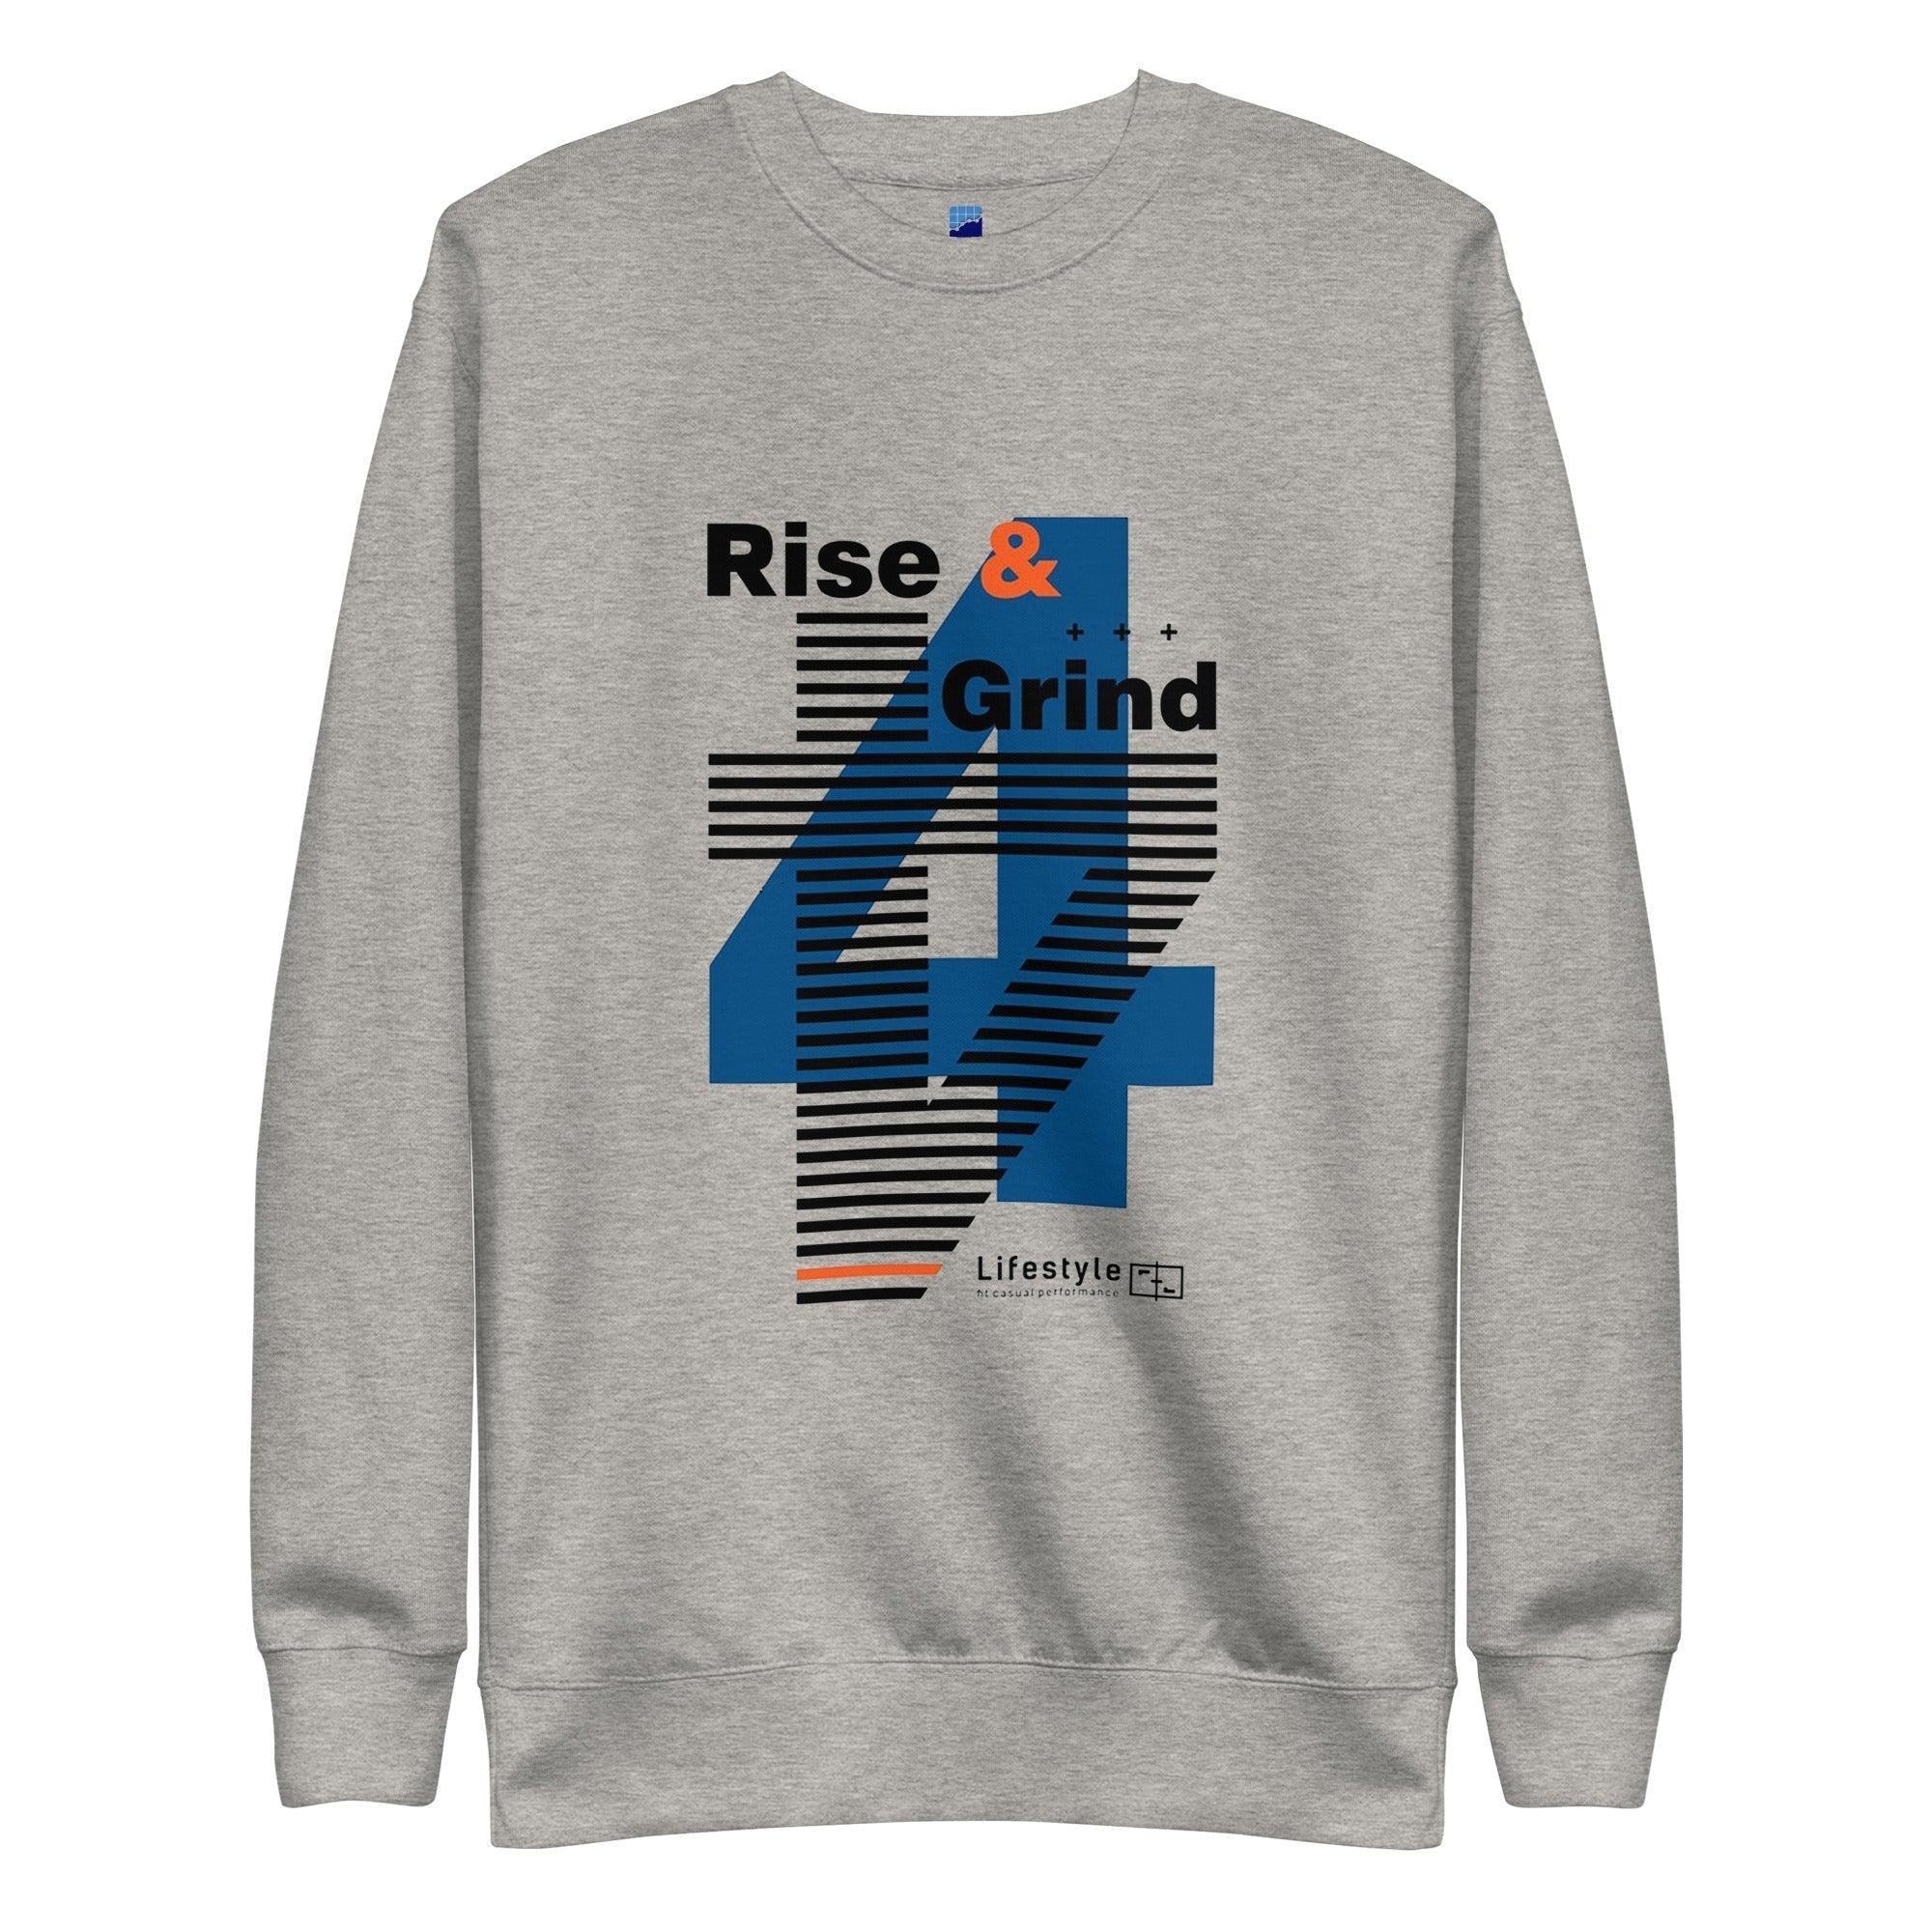 Rise & Grind Lifestyle Sweatshirt - InvestmenTees